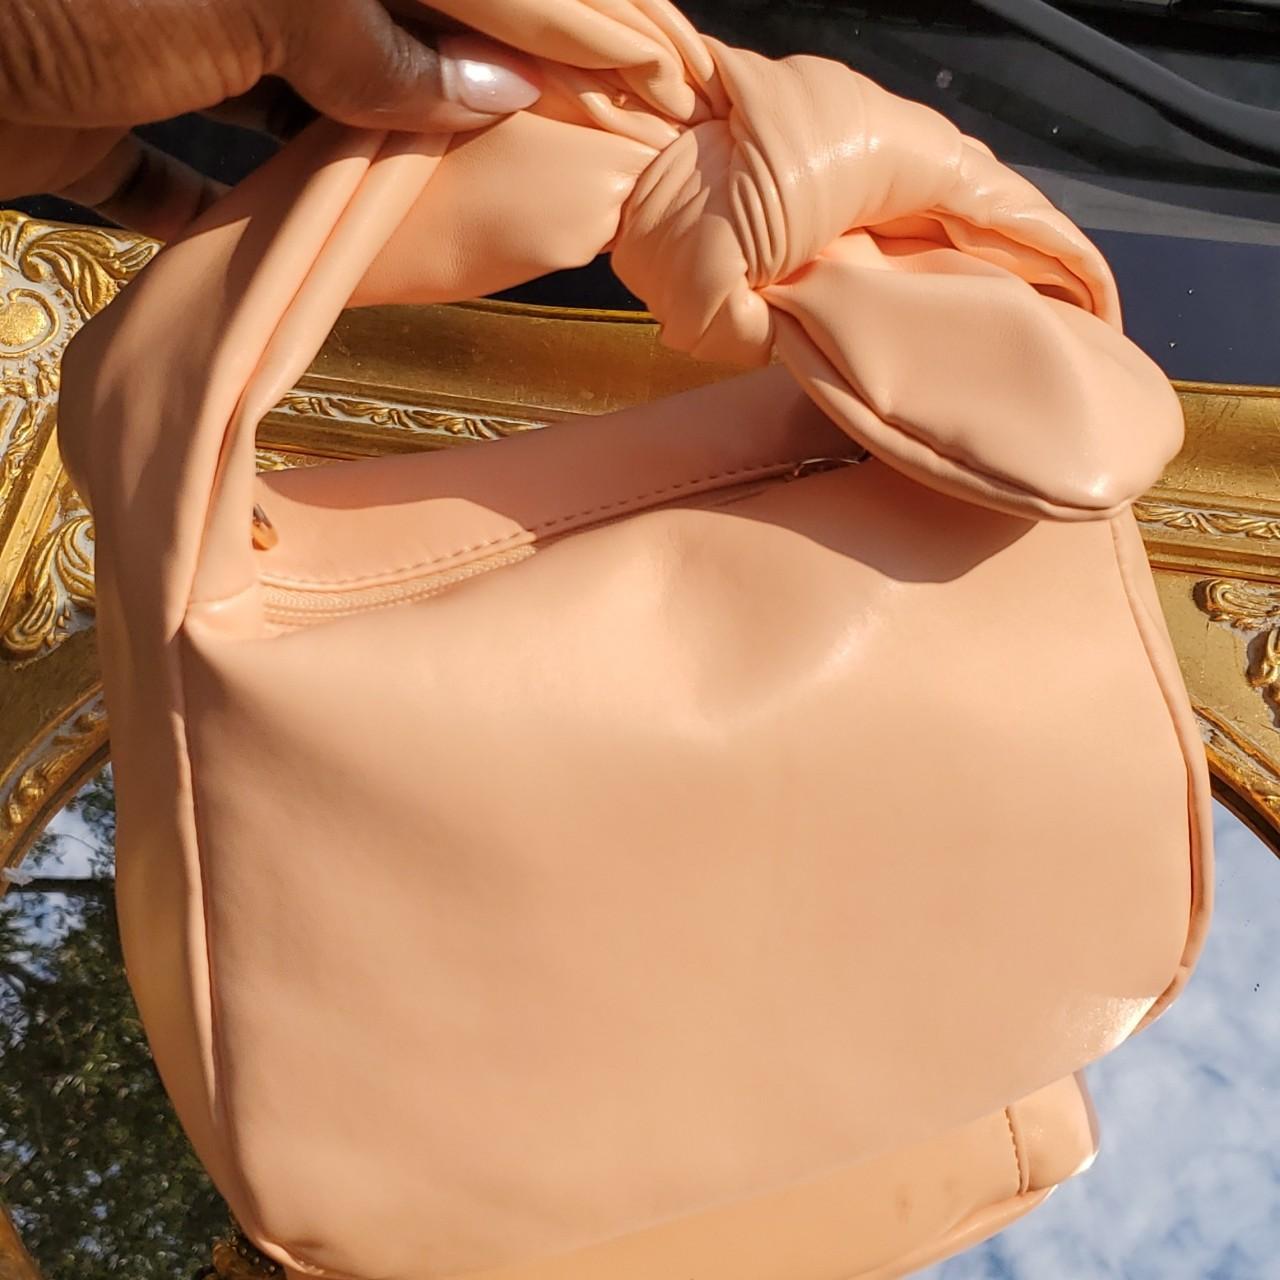 Lauren Conrad Leather Shoulder Handbags